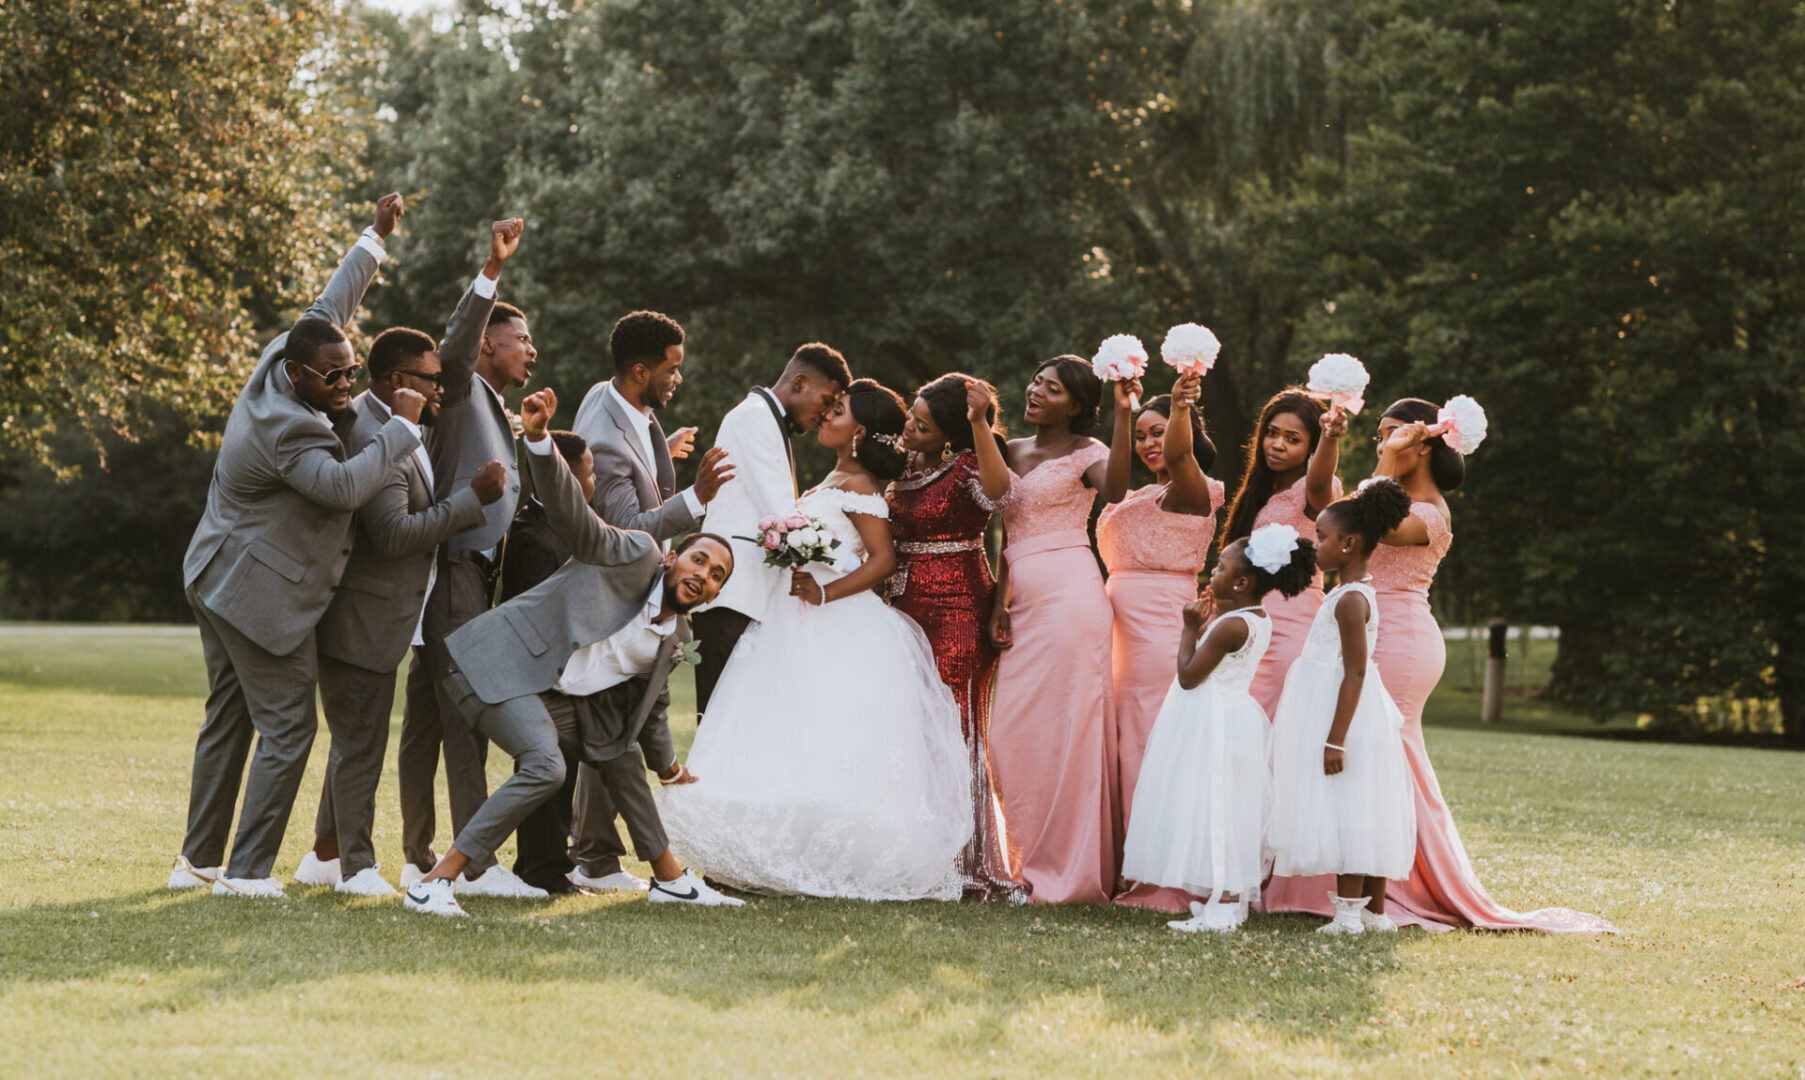 wedding entourage photo with bridesmaids, groomsmen, and flower girls